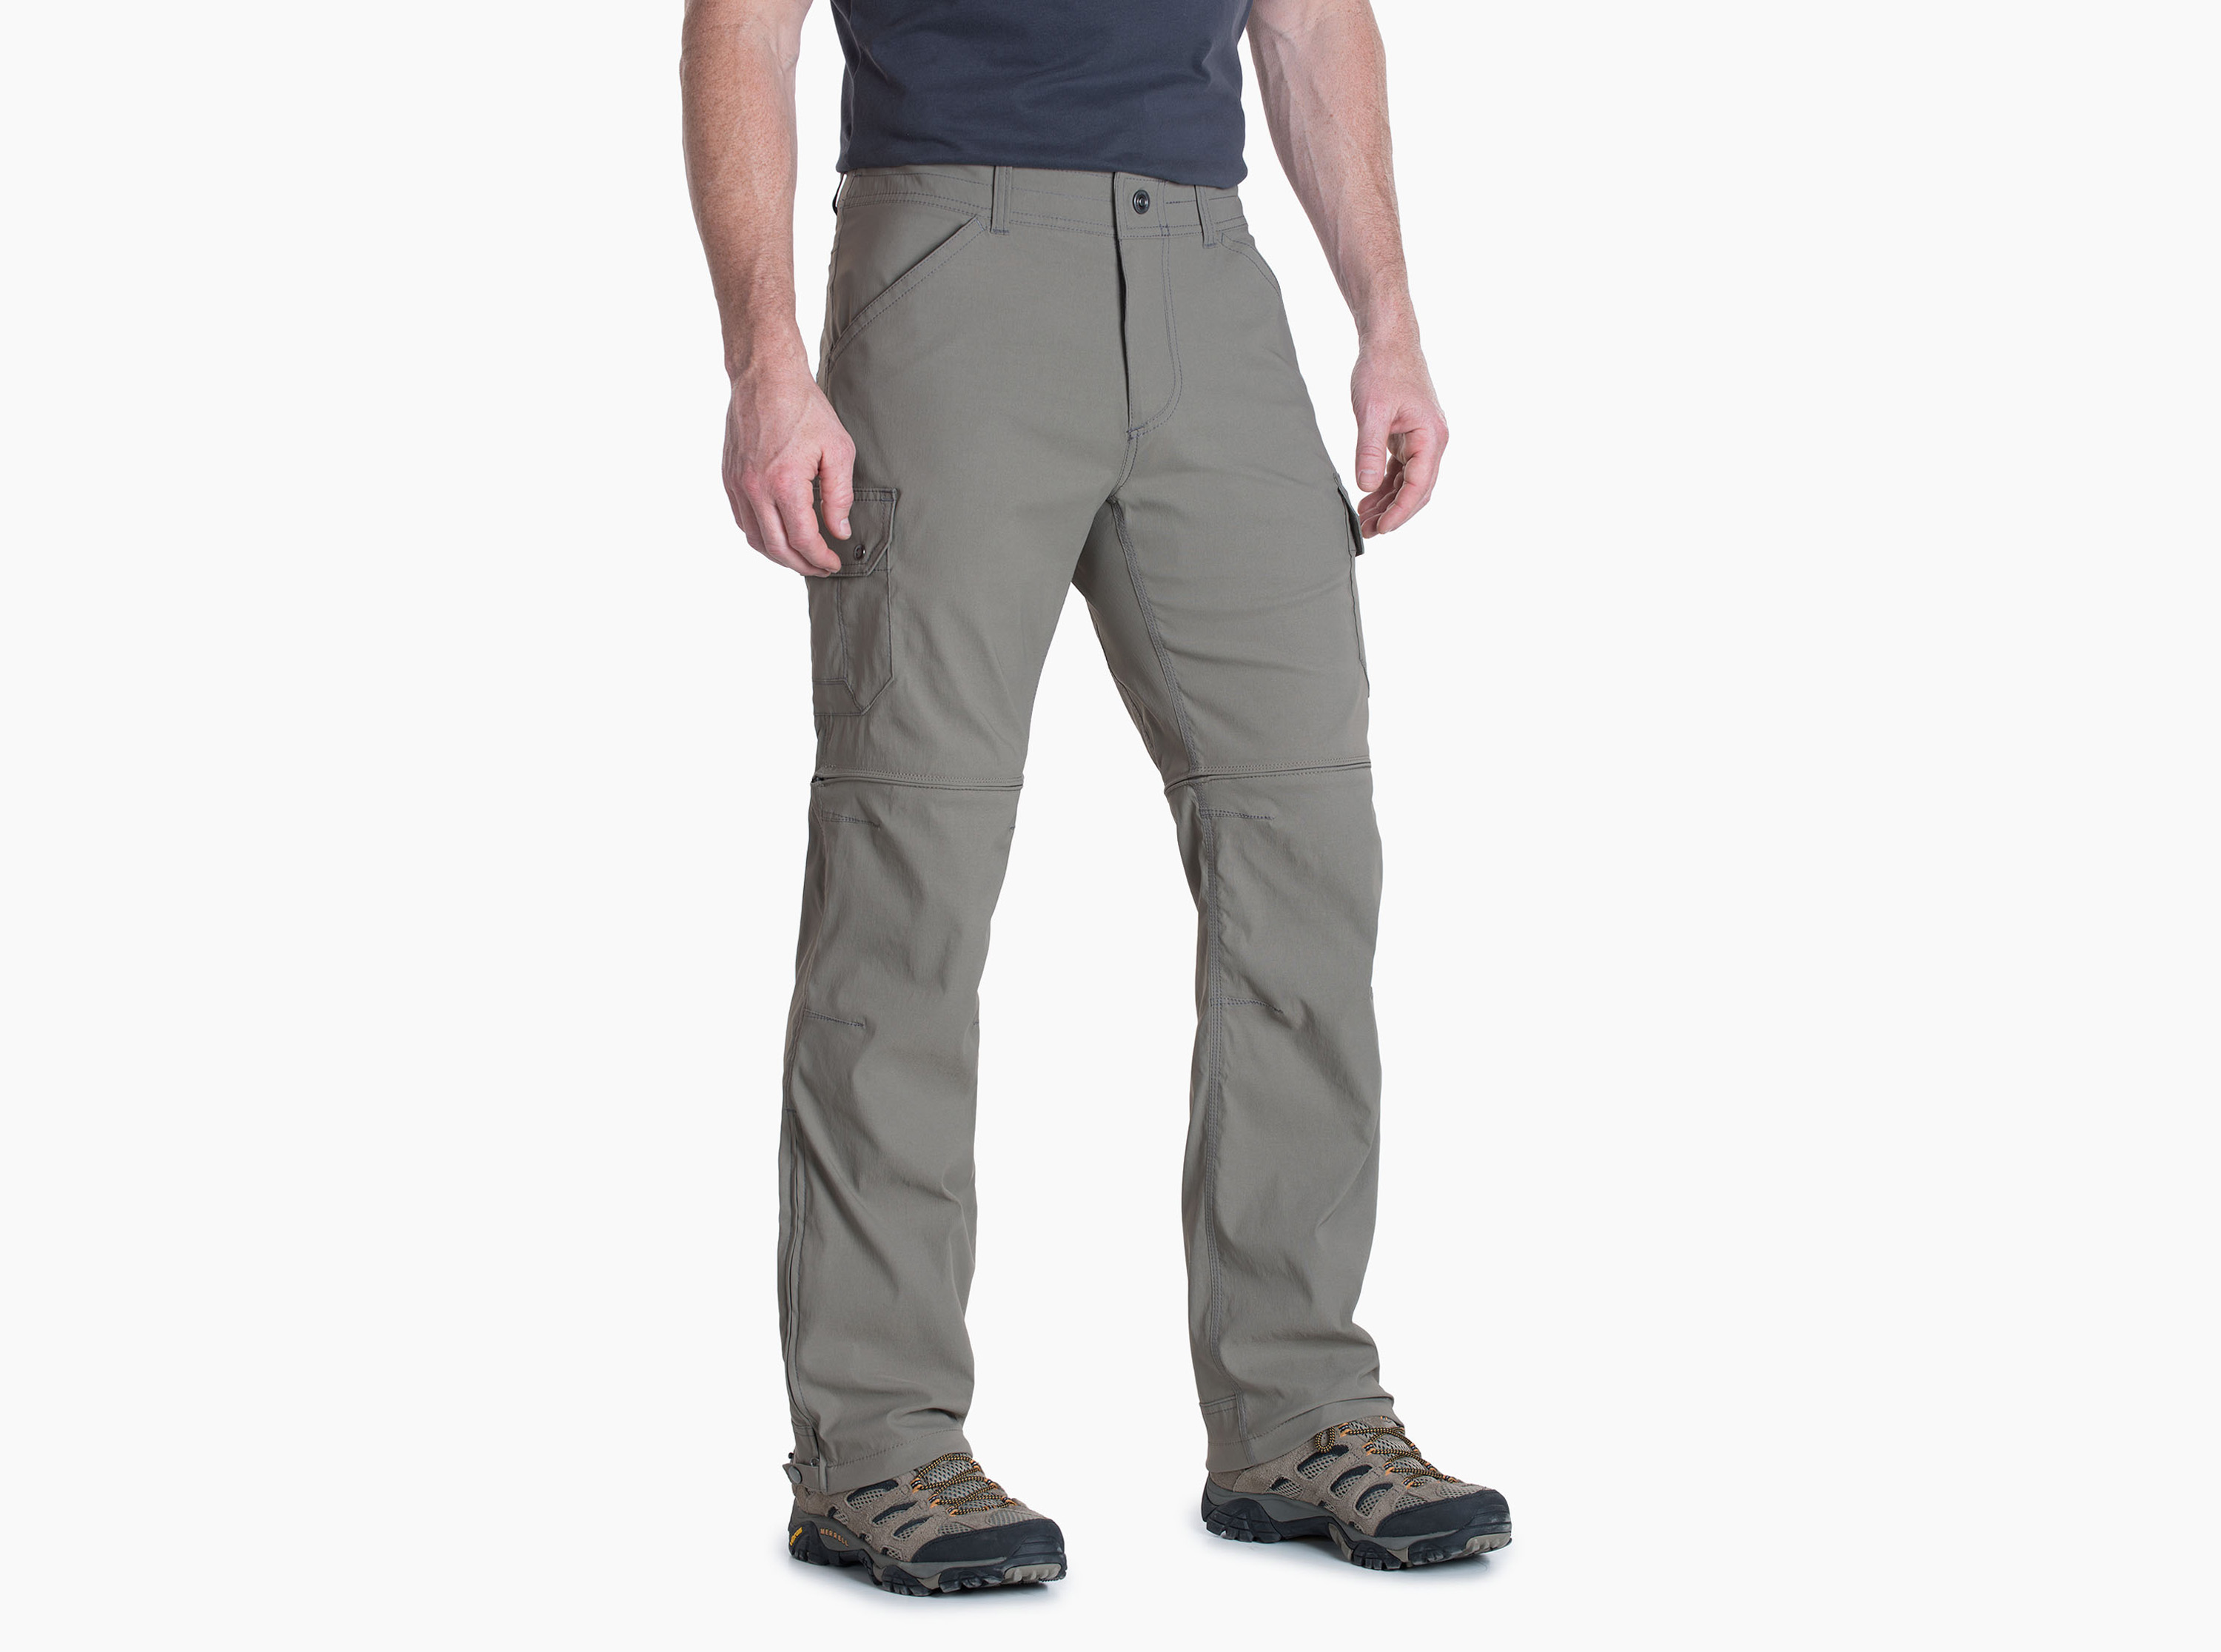 Jackson Quick-Dry Convertible 8 Shorts